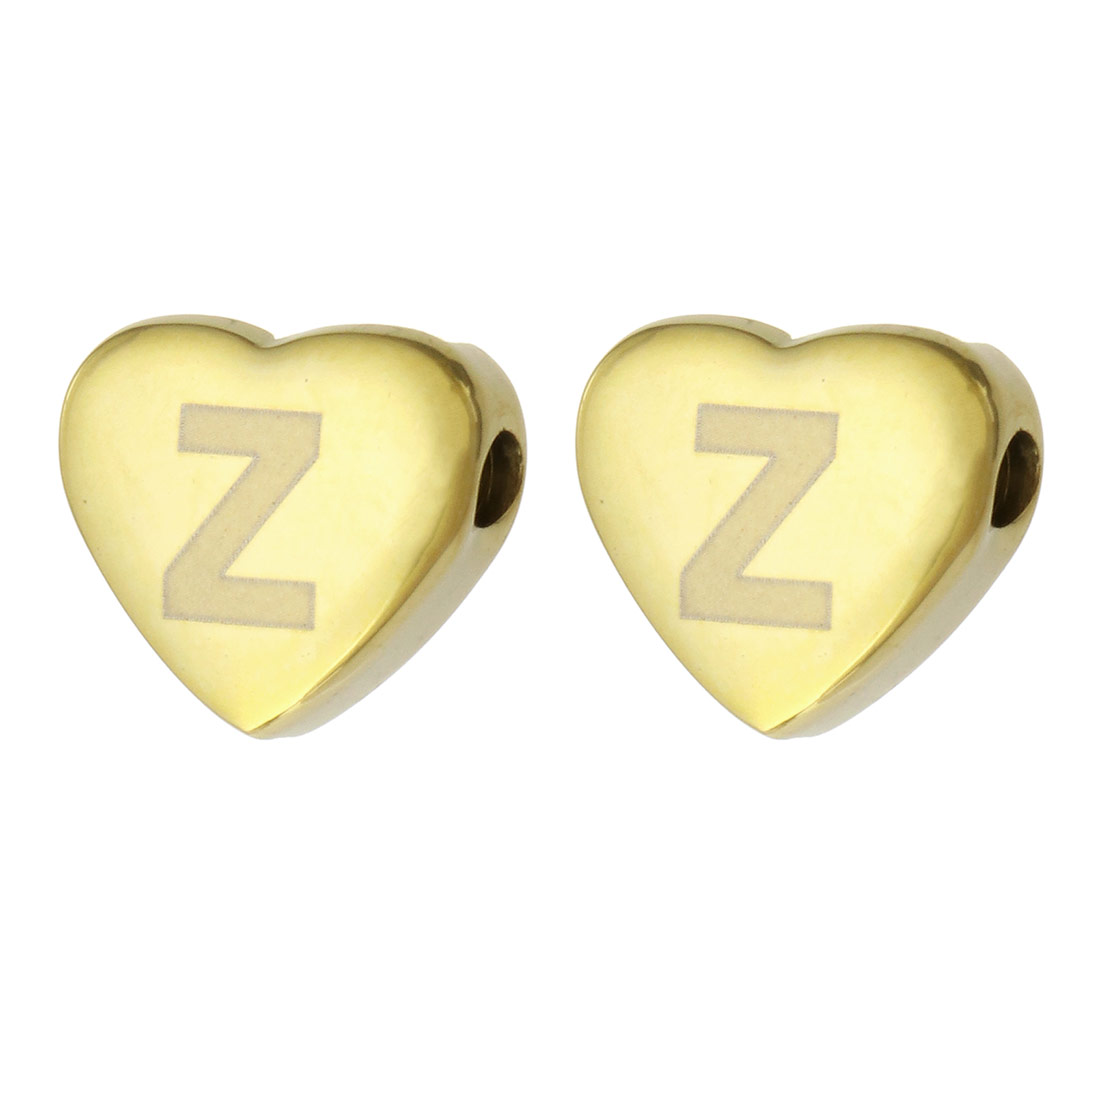 26:Gold Z